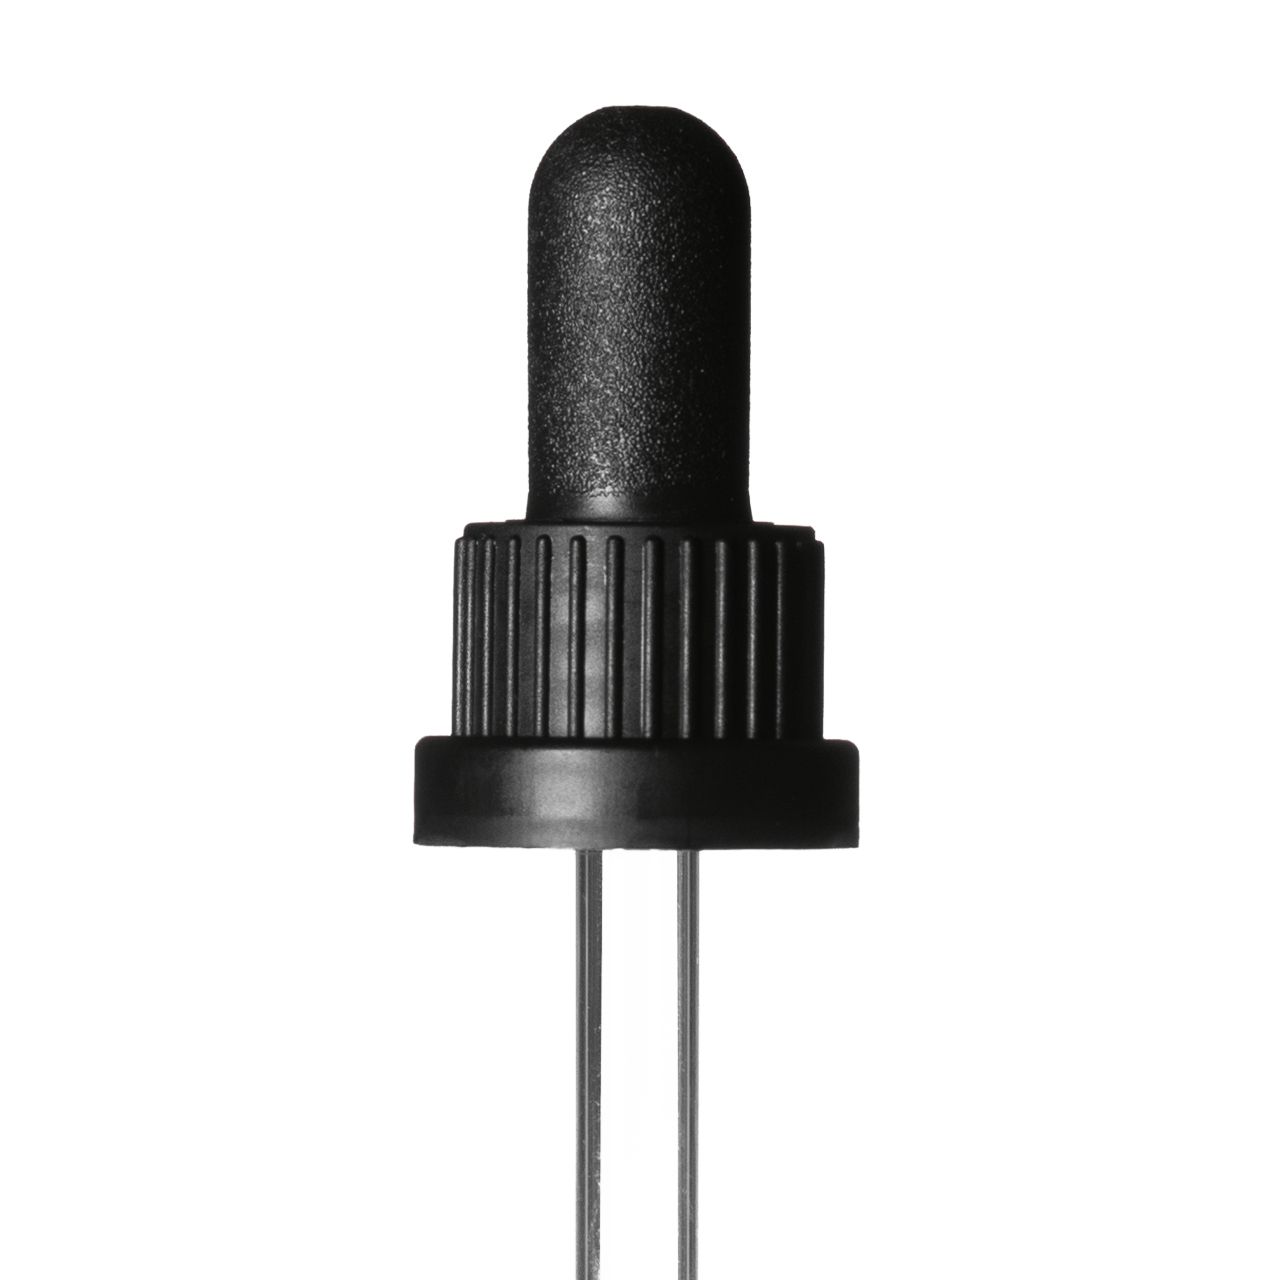 Pipette tamper evident DIN18, III, black, ribbed, bulb CB, dose 1.0ml, bent ball tip (Orion 100)